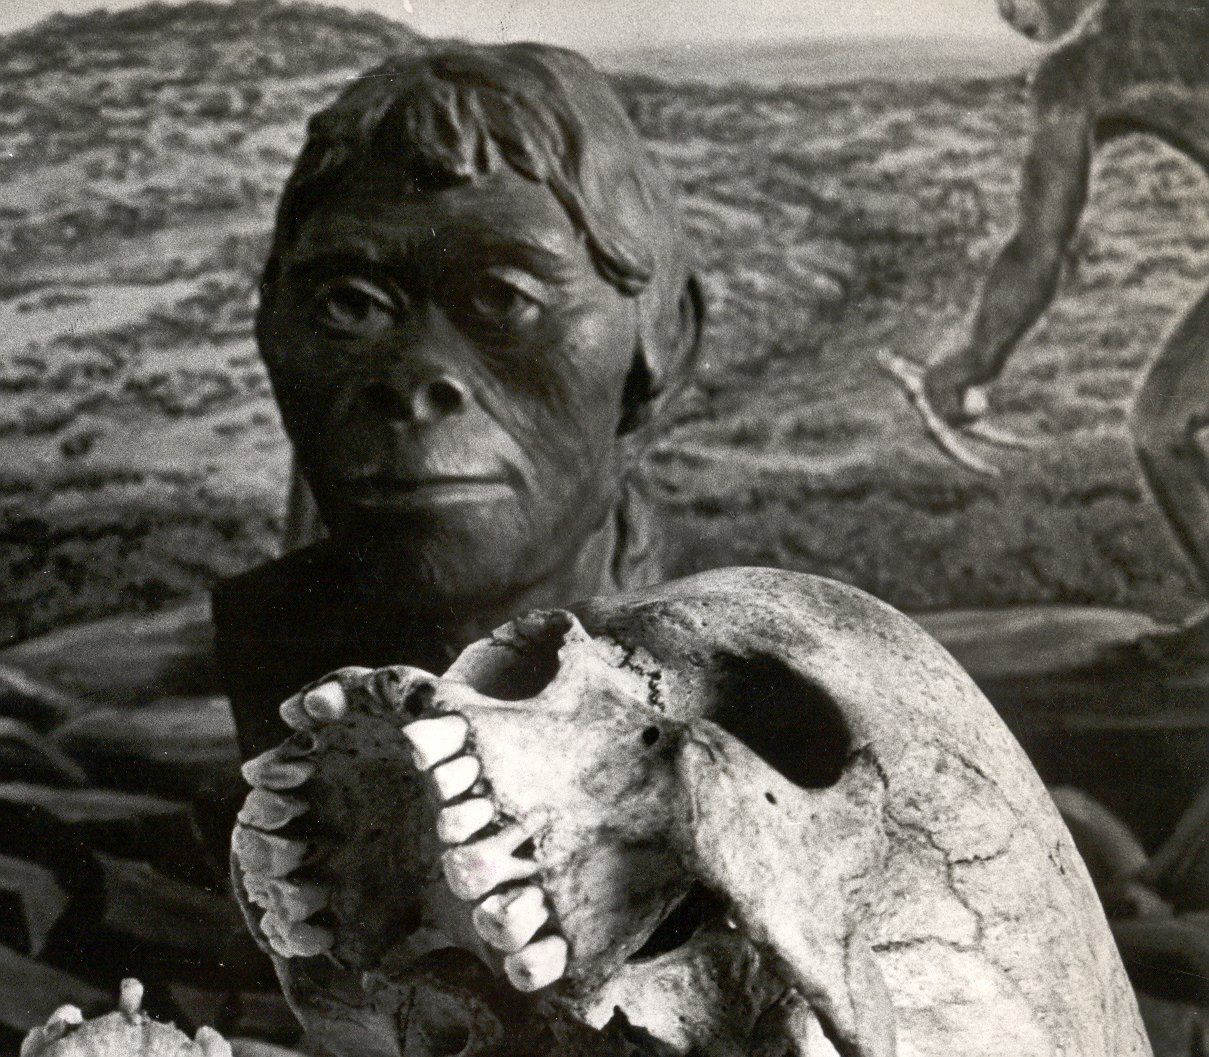 Mrs. Ples, Australopithecus, South Africa